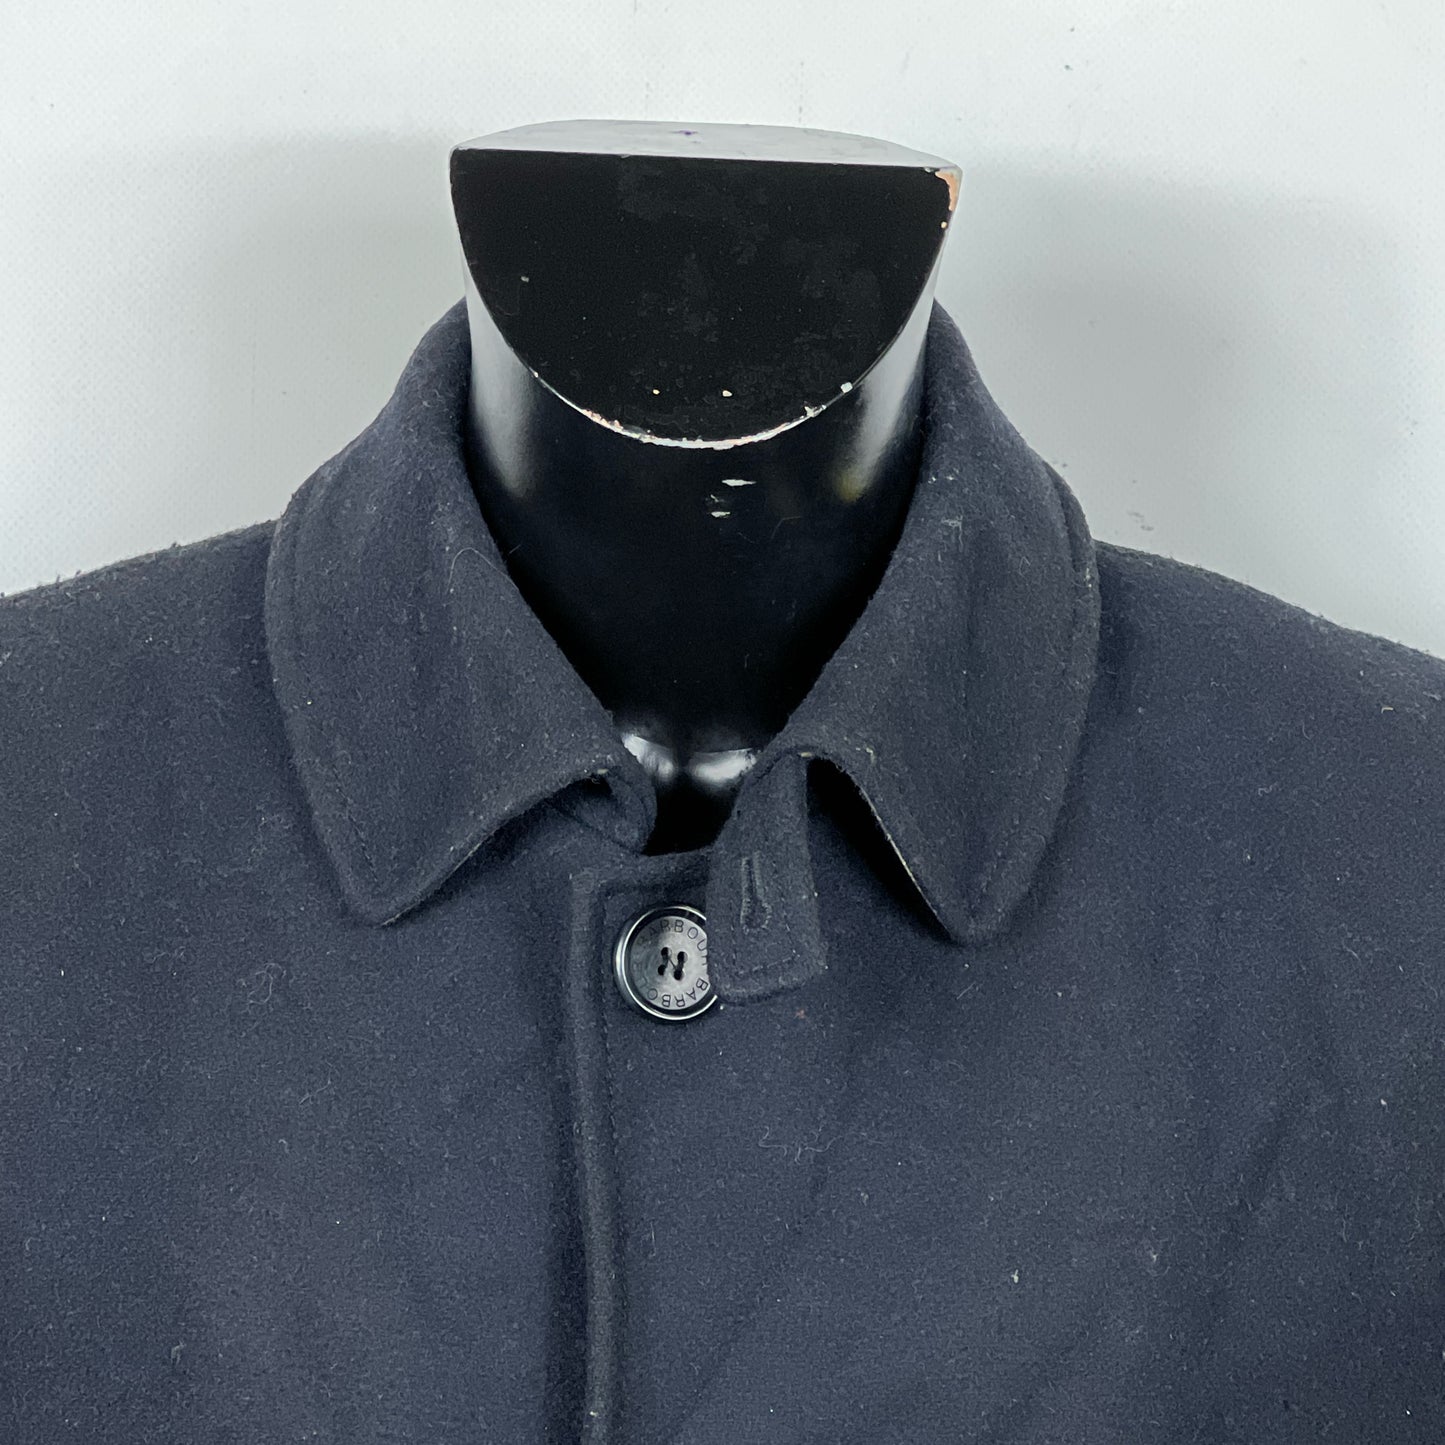 Cappotto Barbour blu da uomo in lana 42 Man Navy wool Coat size Large